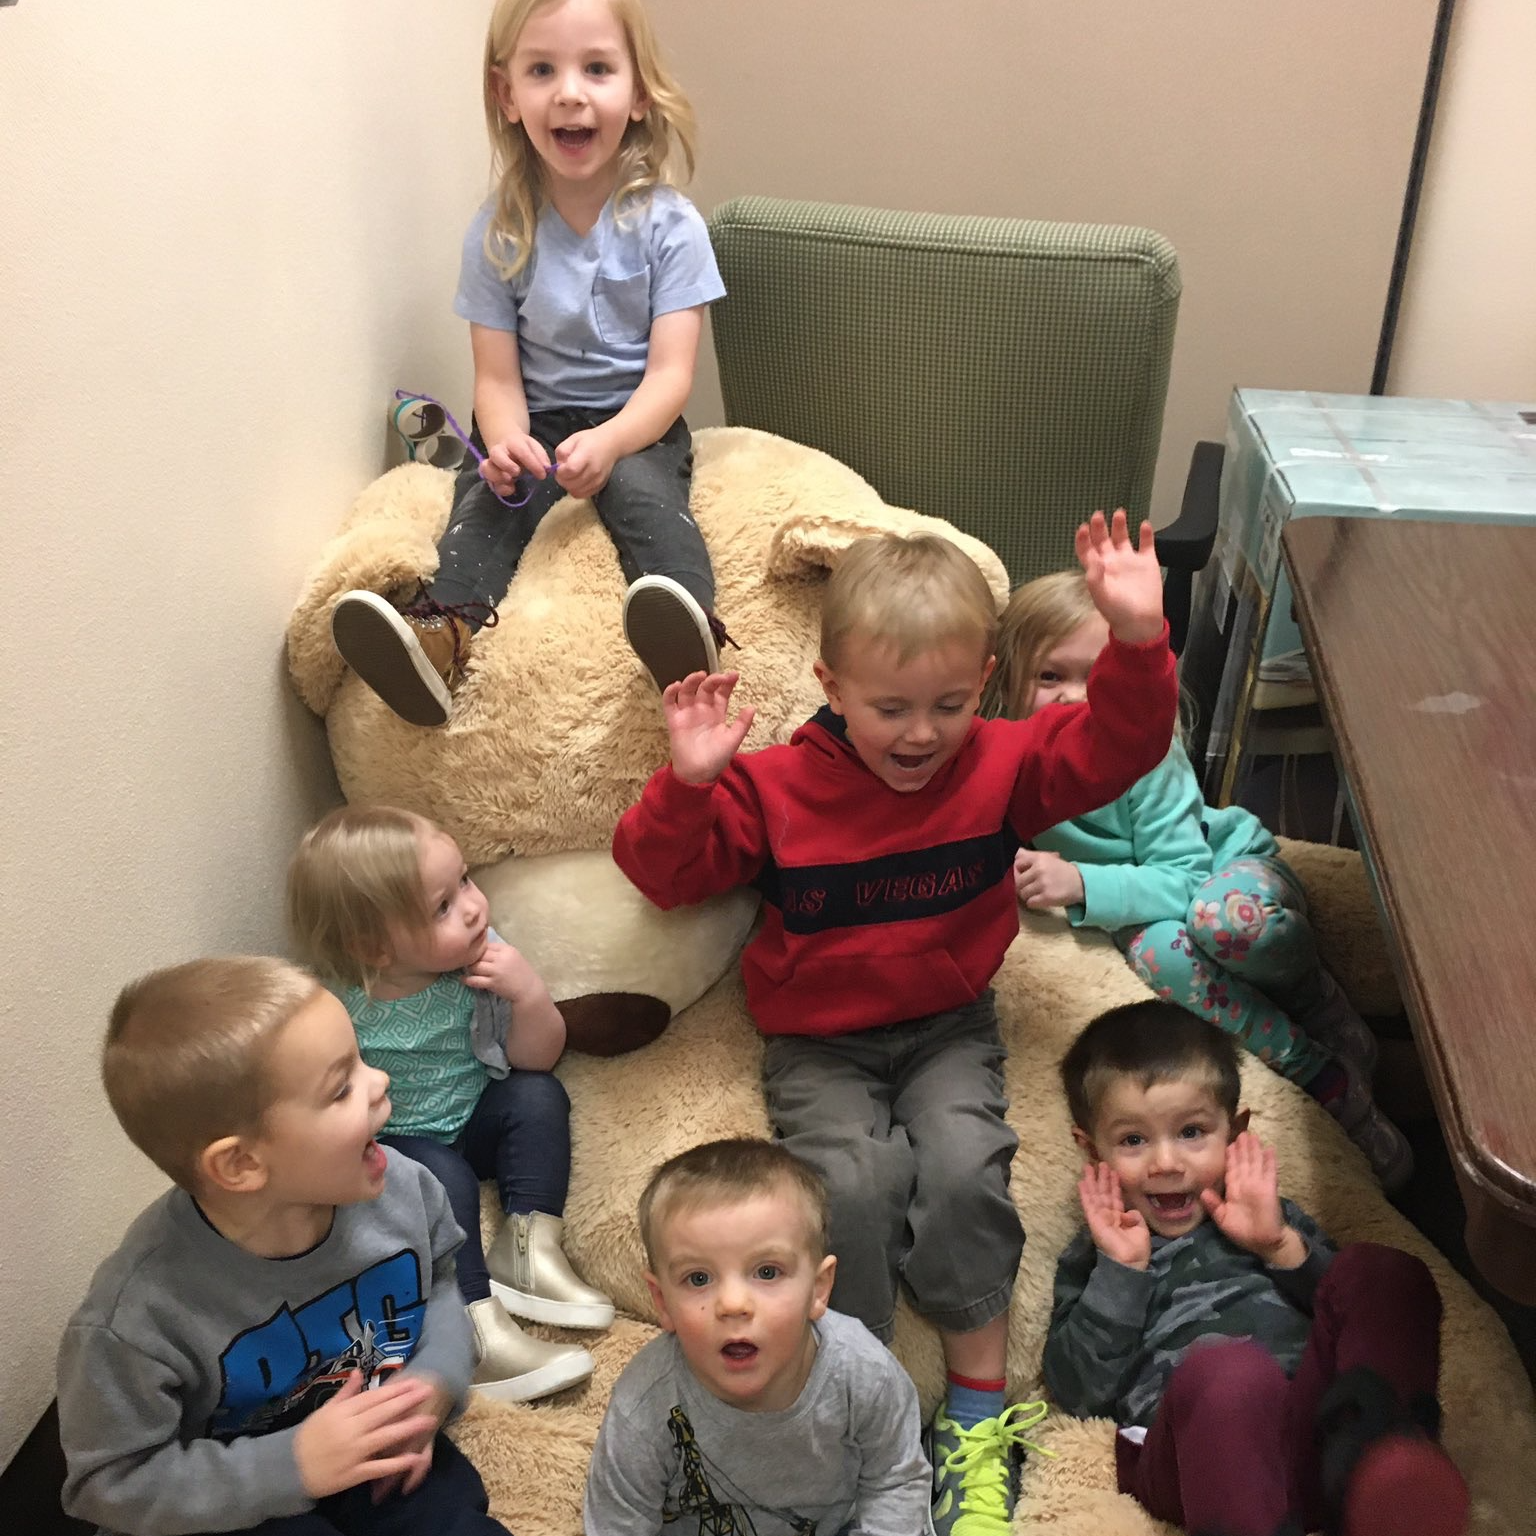 Students on big teddy bear